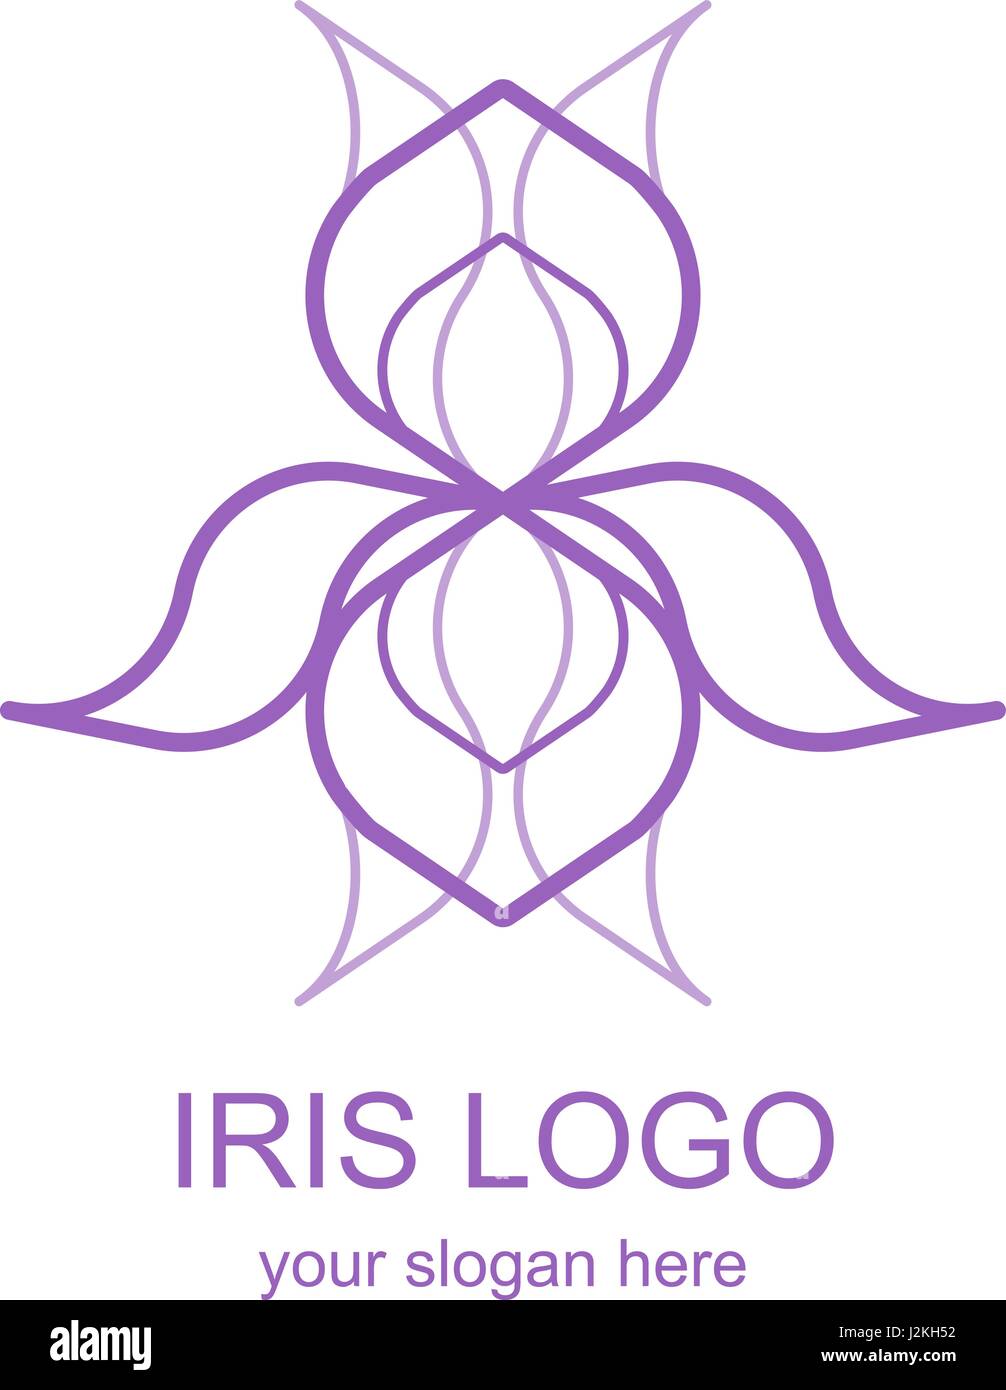 Icono lineal floral. Flor de Iris lineart logo. Línea fina logotipo para un  spa, un centro de bienestar, con masajes o salón de belleza. Elemento de  diseño vectorial en monolin Imagen Vector